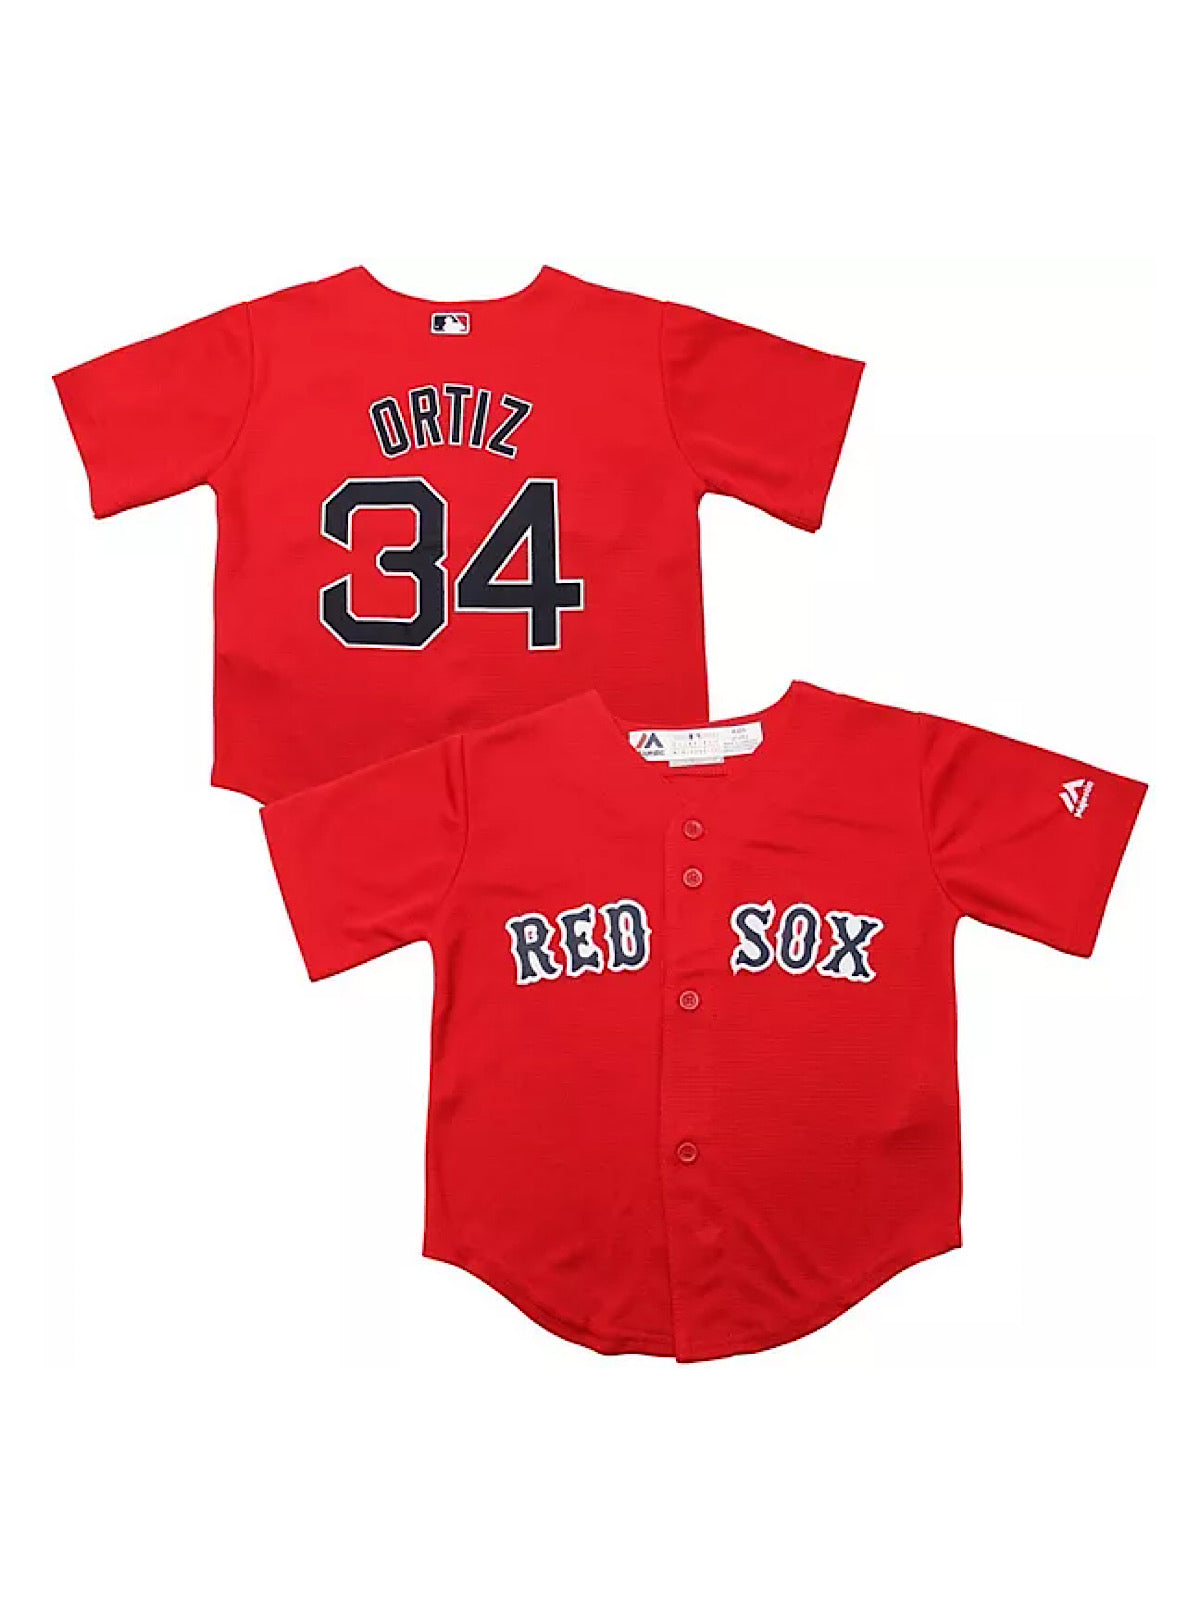 Big & Tall Mitchell & Ness MLB Player Jersey - Red Sox #9 - Yahoo